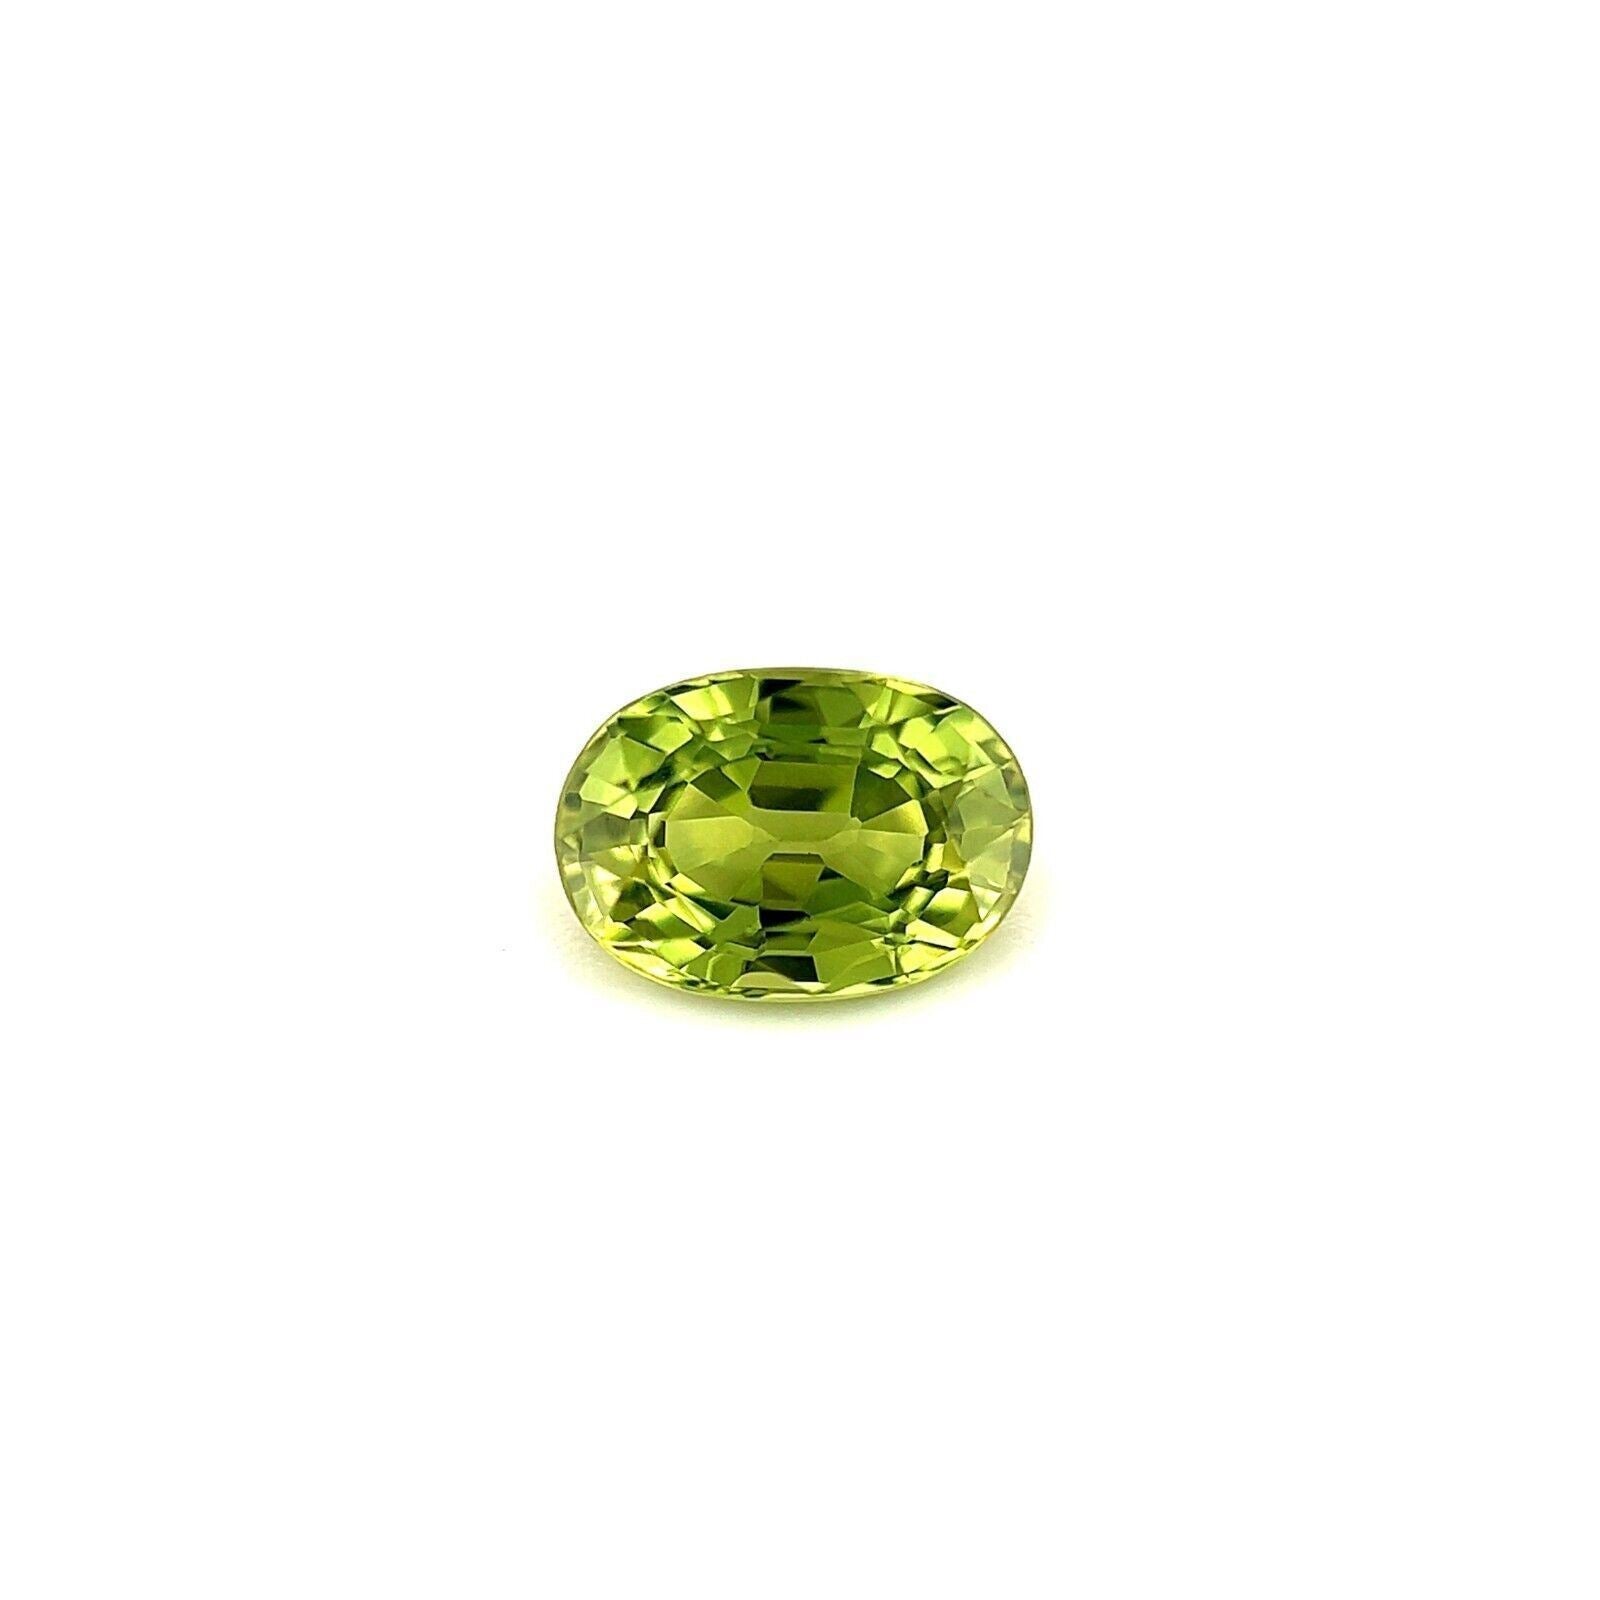 Vivid Lime Green Australia Sapphire 0.70ct Oval Cut Loose Gem 6x4.3mm For Sale